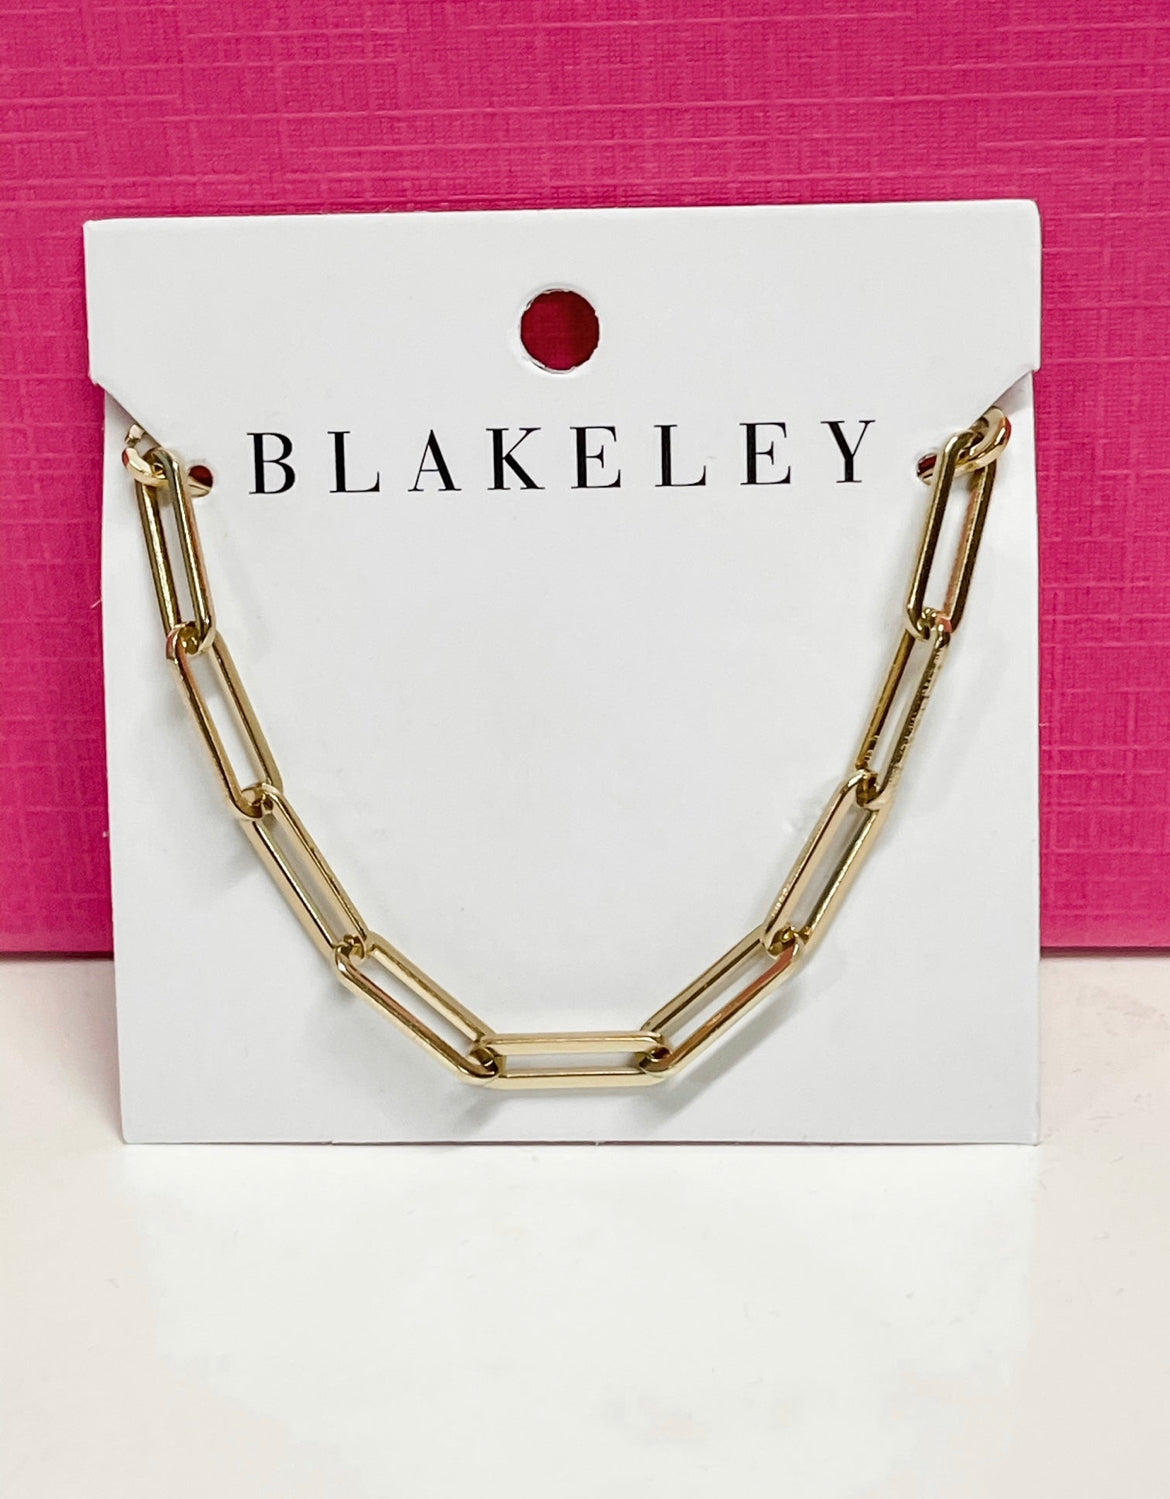 Lexi Chain Necklace